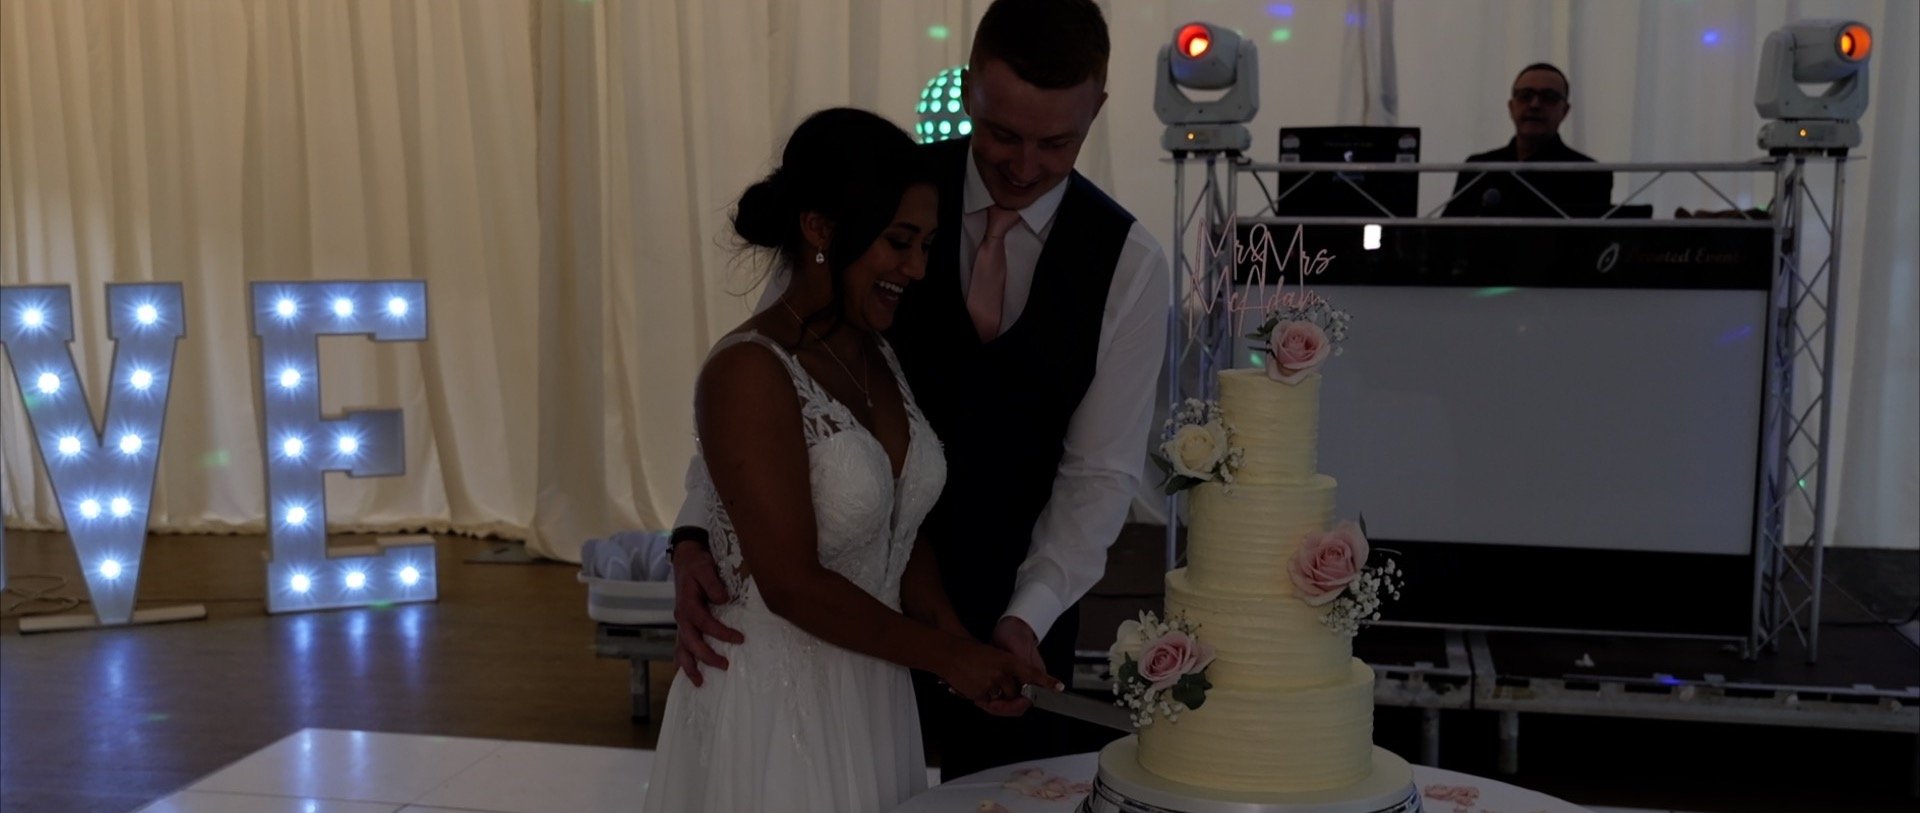 Cutting the wedding cake video - 3 Cheers Media -  Parklands.jpg